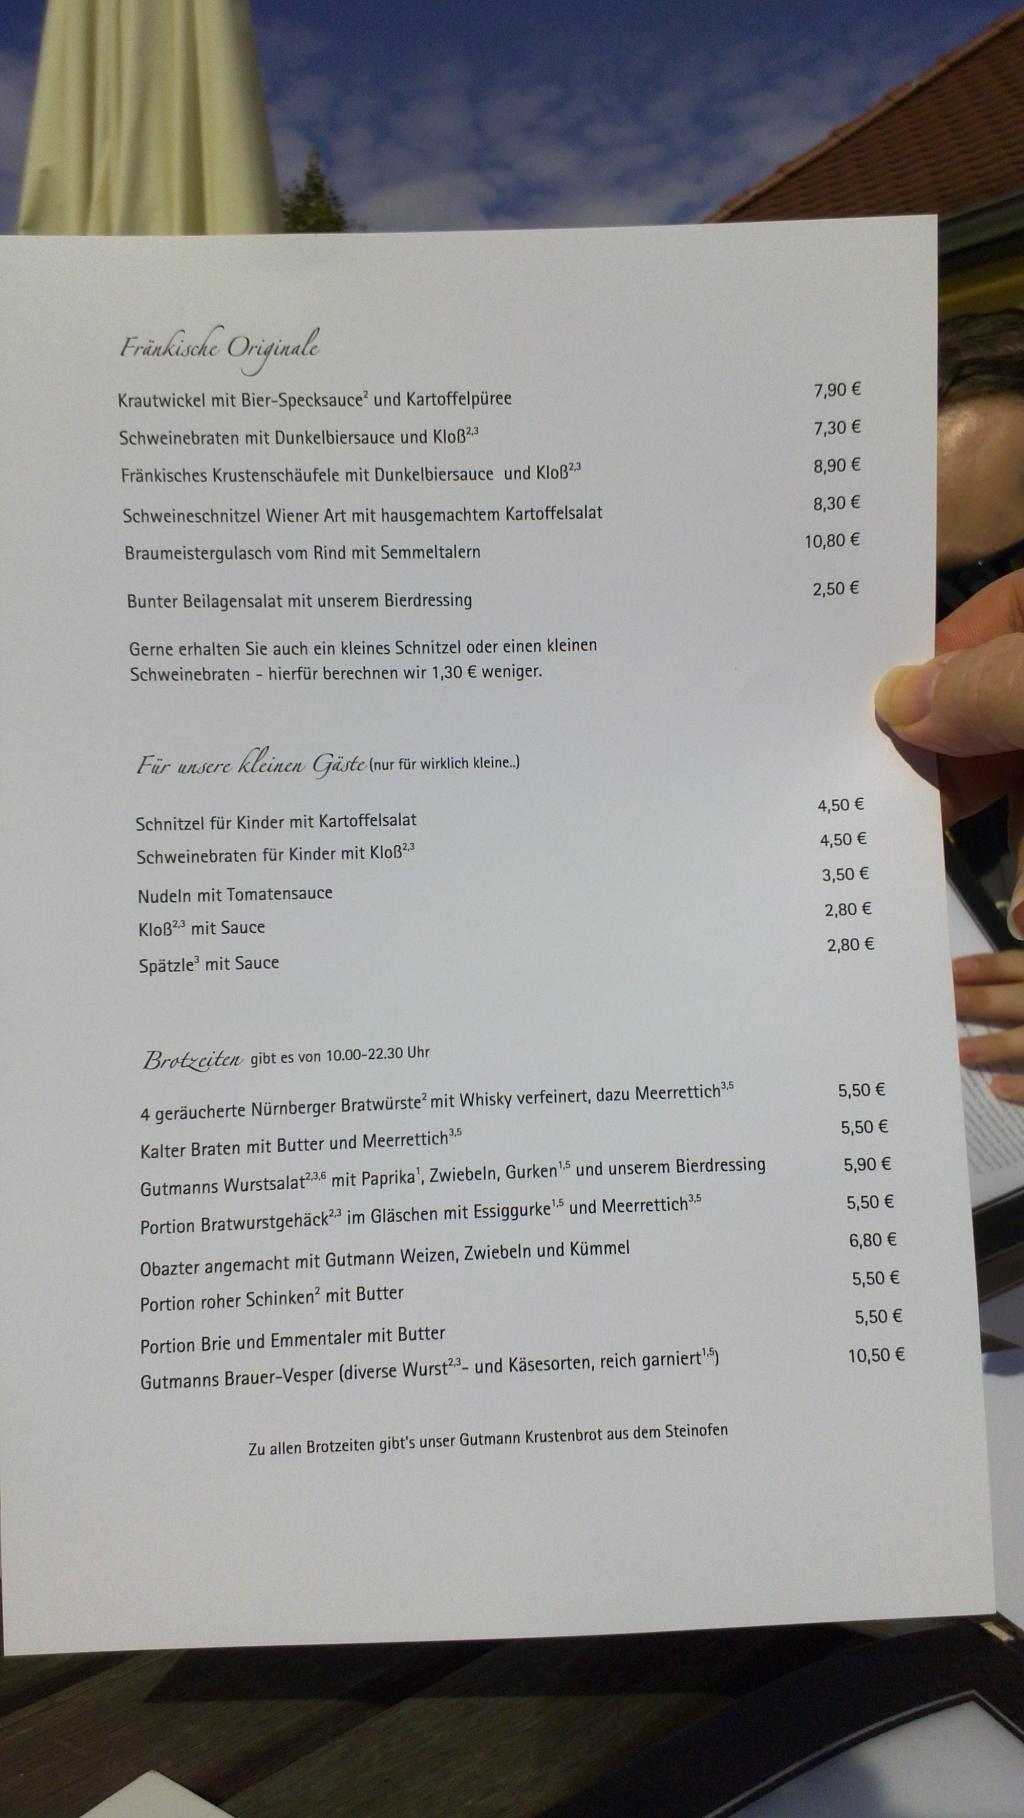 Our lunch menu (German)